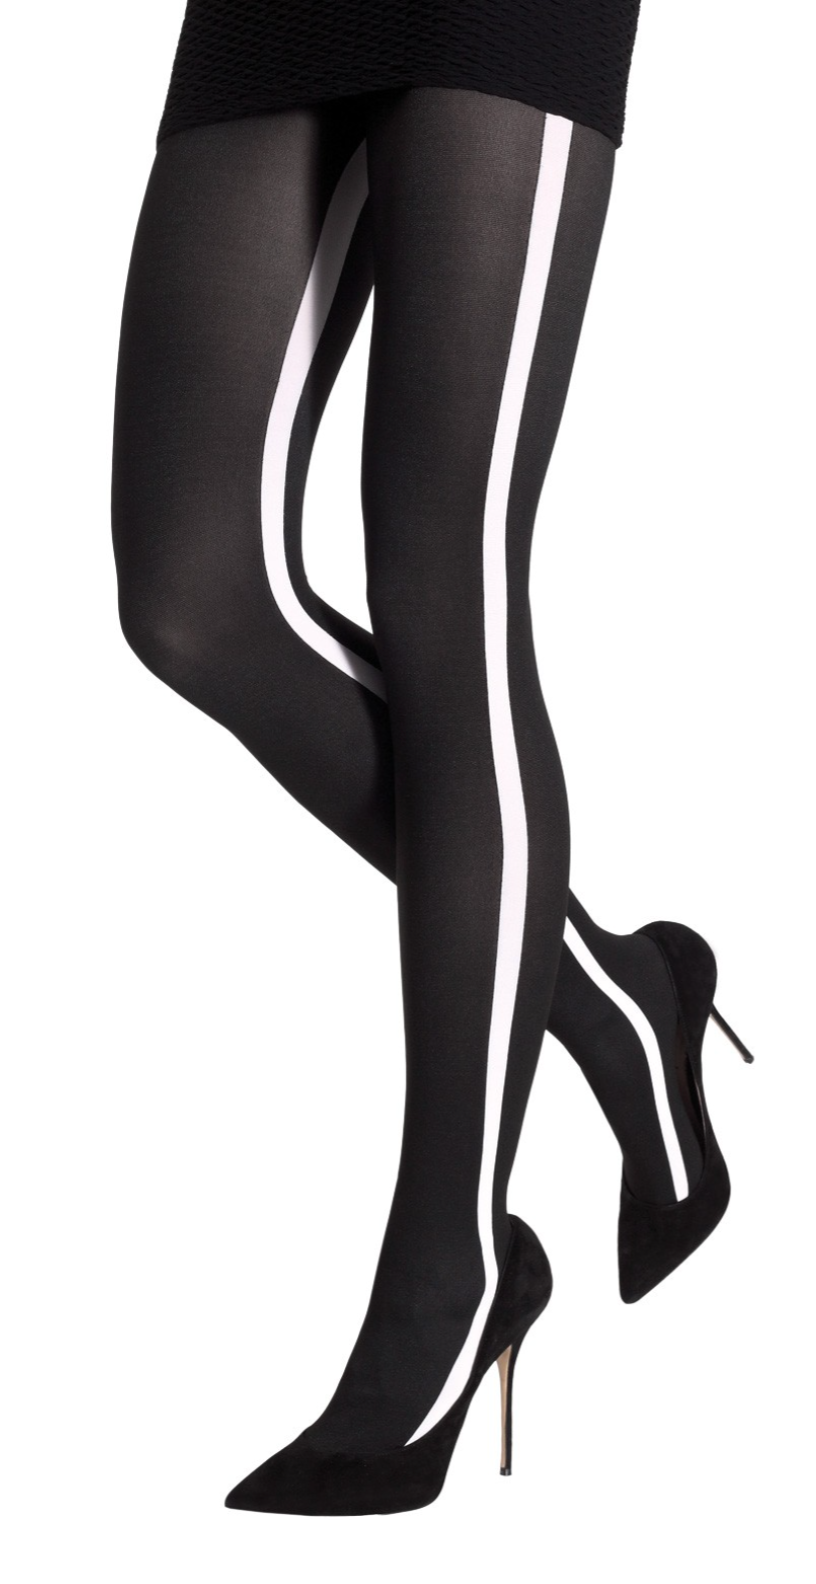 Emilio Cavallini Sport Band Tights - Black opaque fashion tights with a white side sports style stripe.